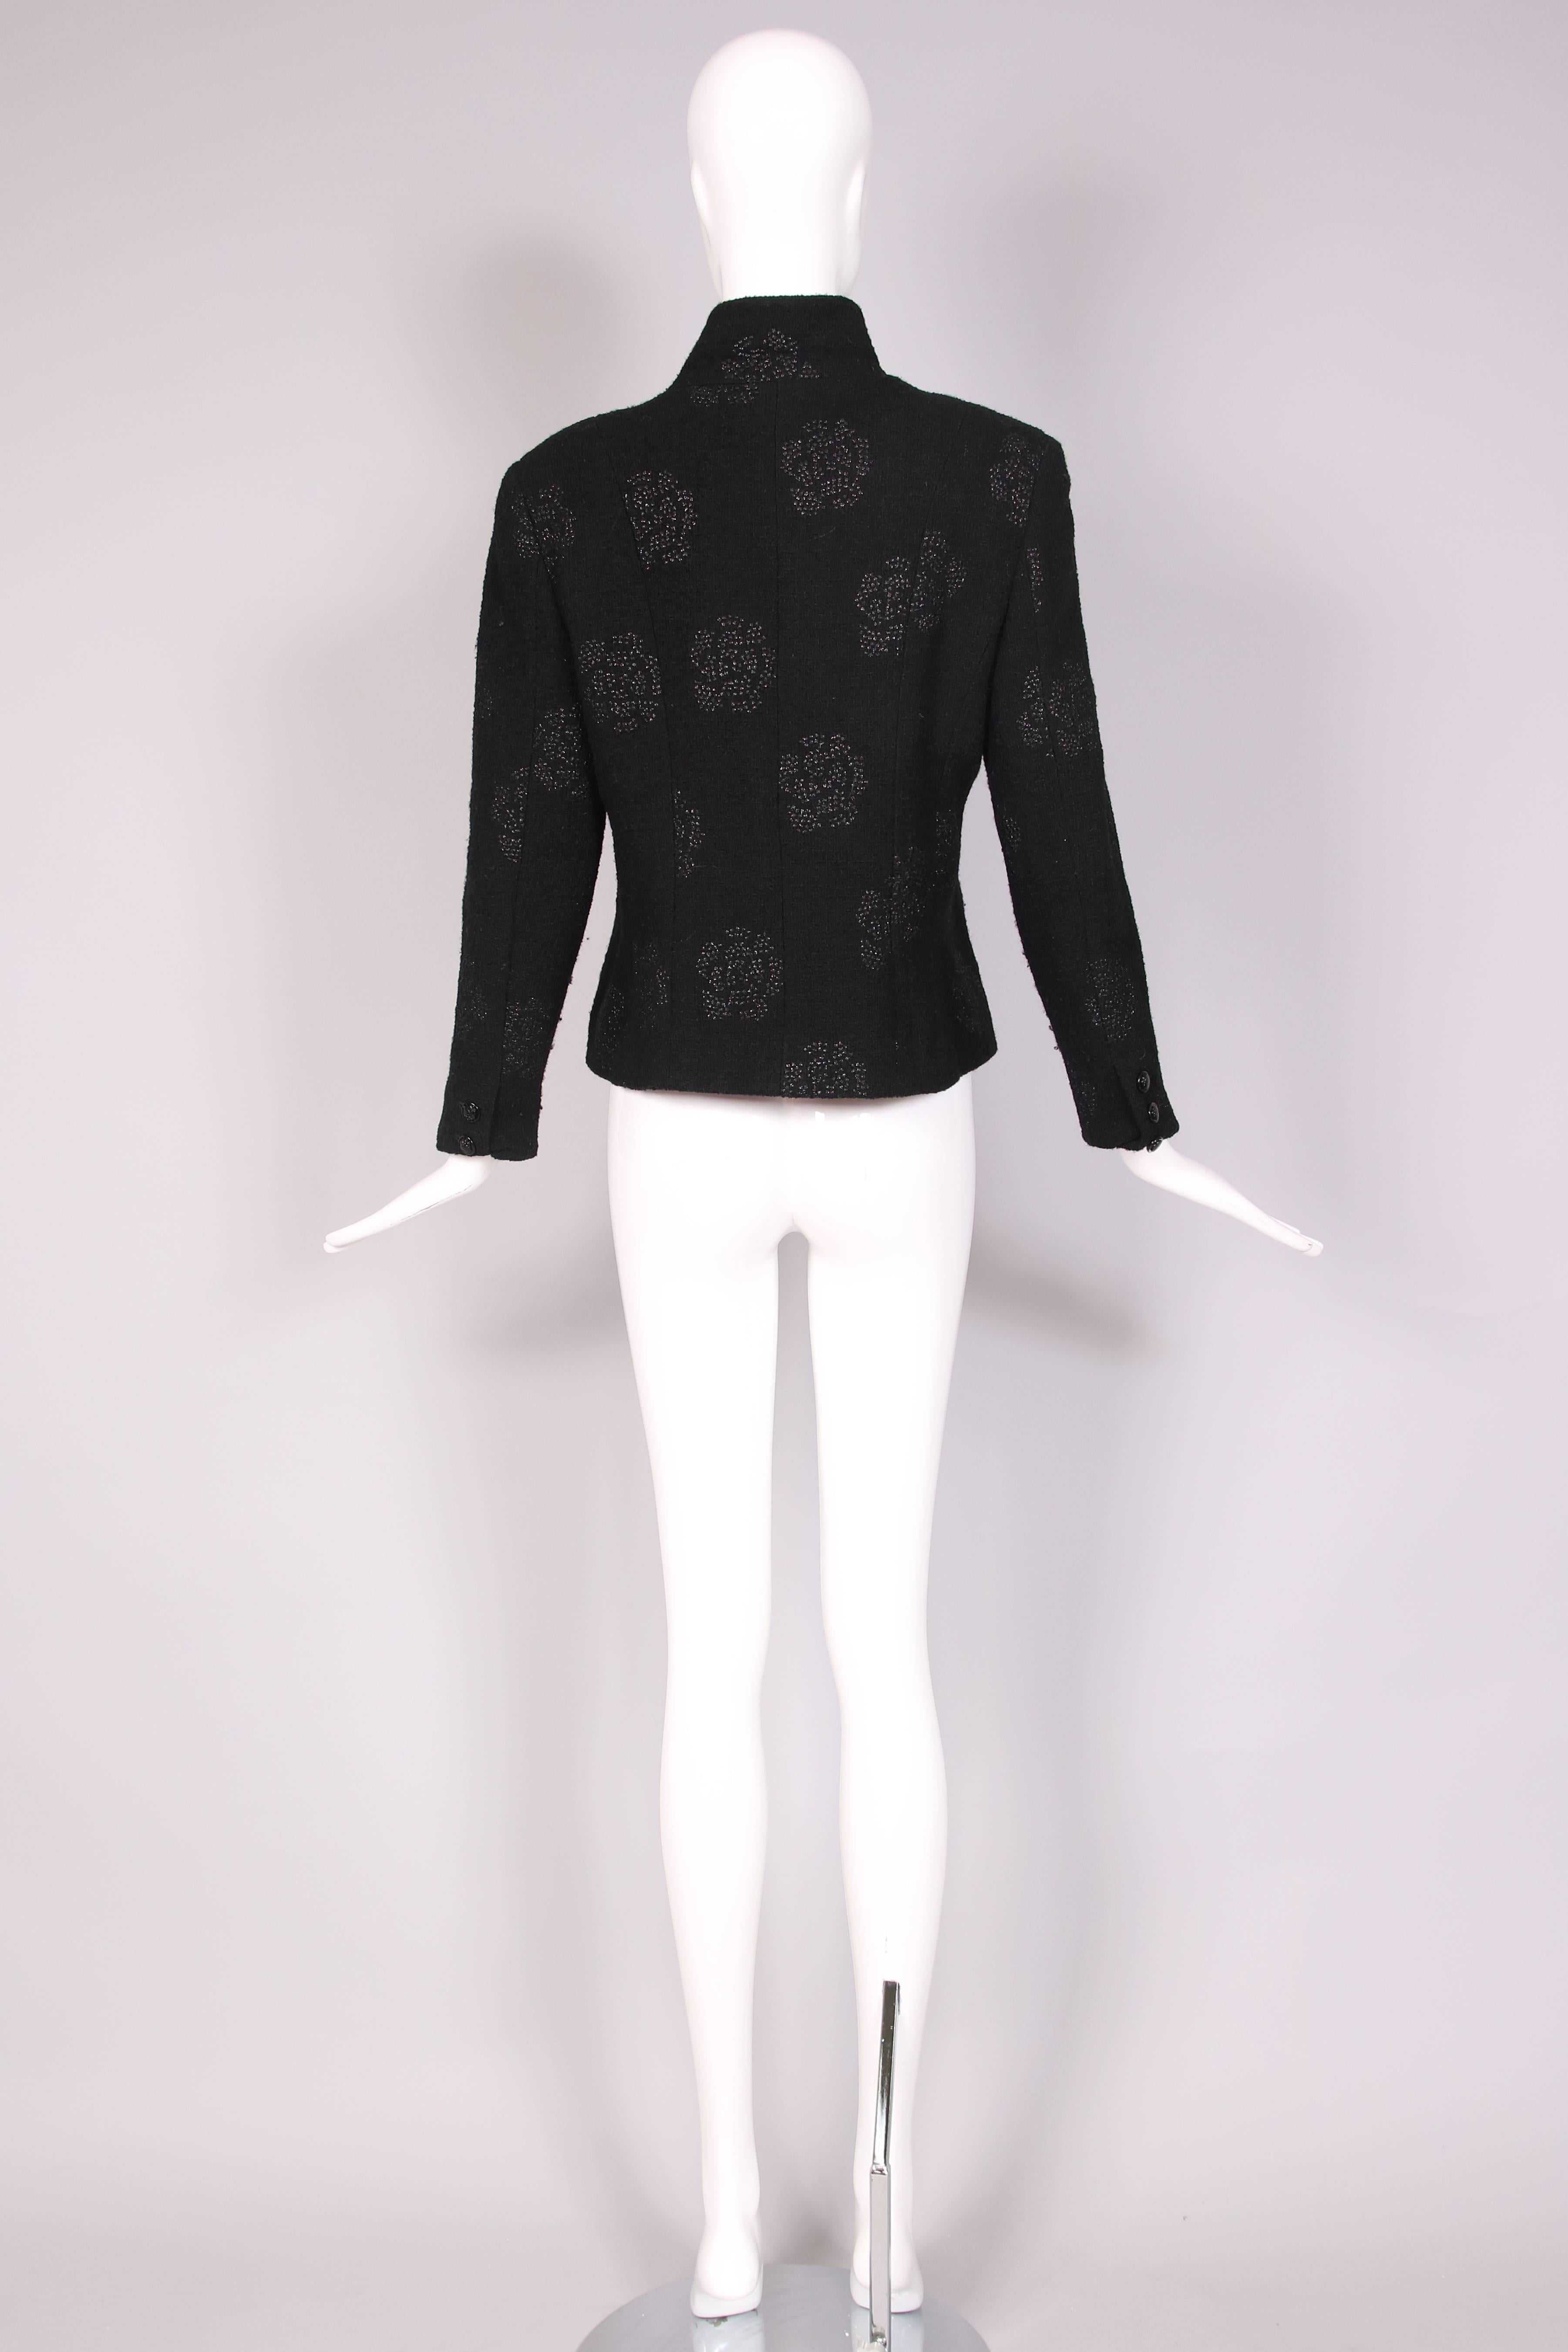 2003 Chanel Black Wool Boucle Jacket w/Camellia Print 1